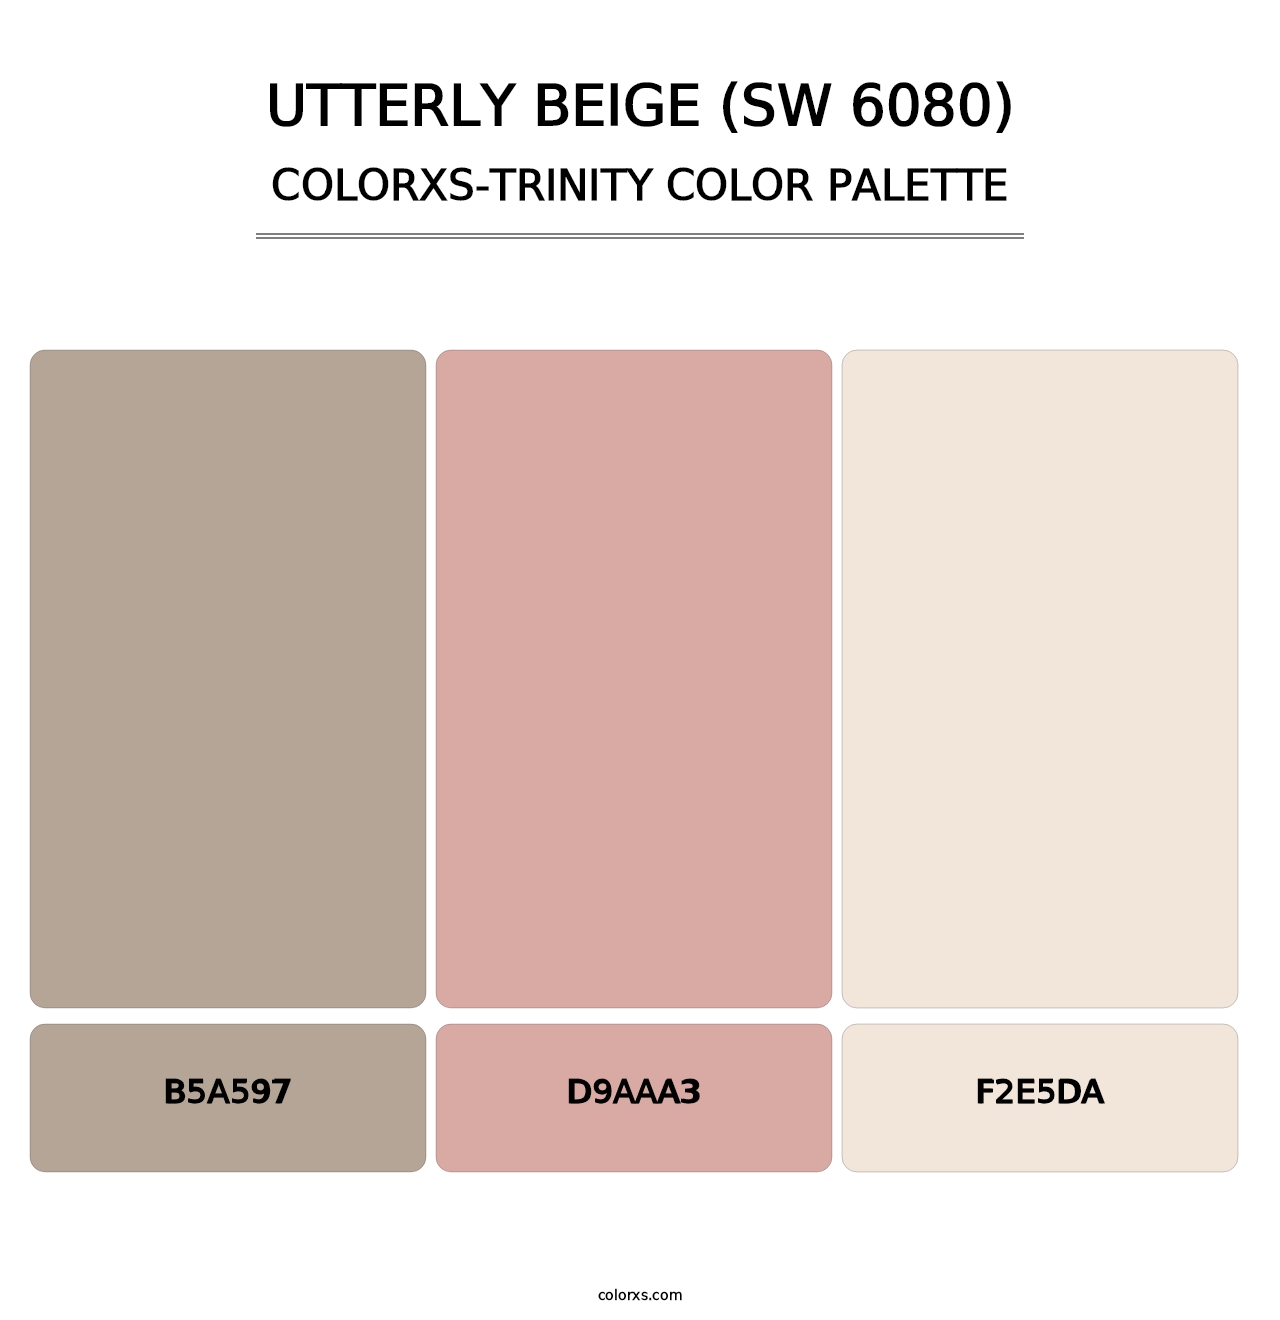 Utterly Beige (SW 6080) - Colorxs Trinity Palette